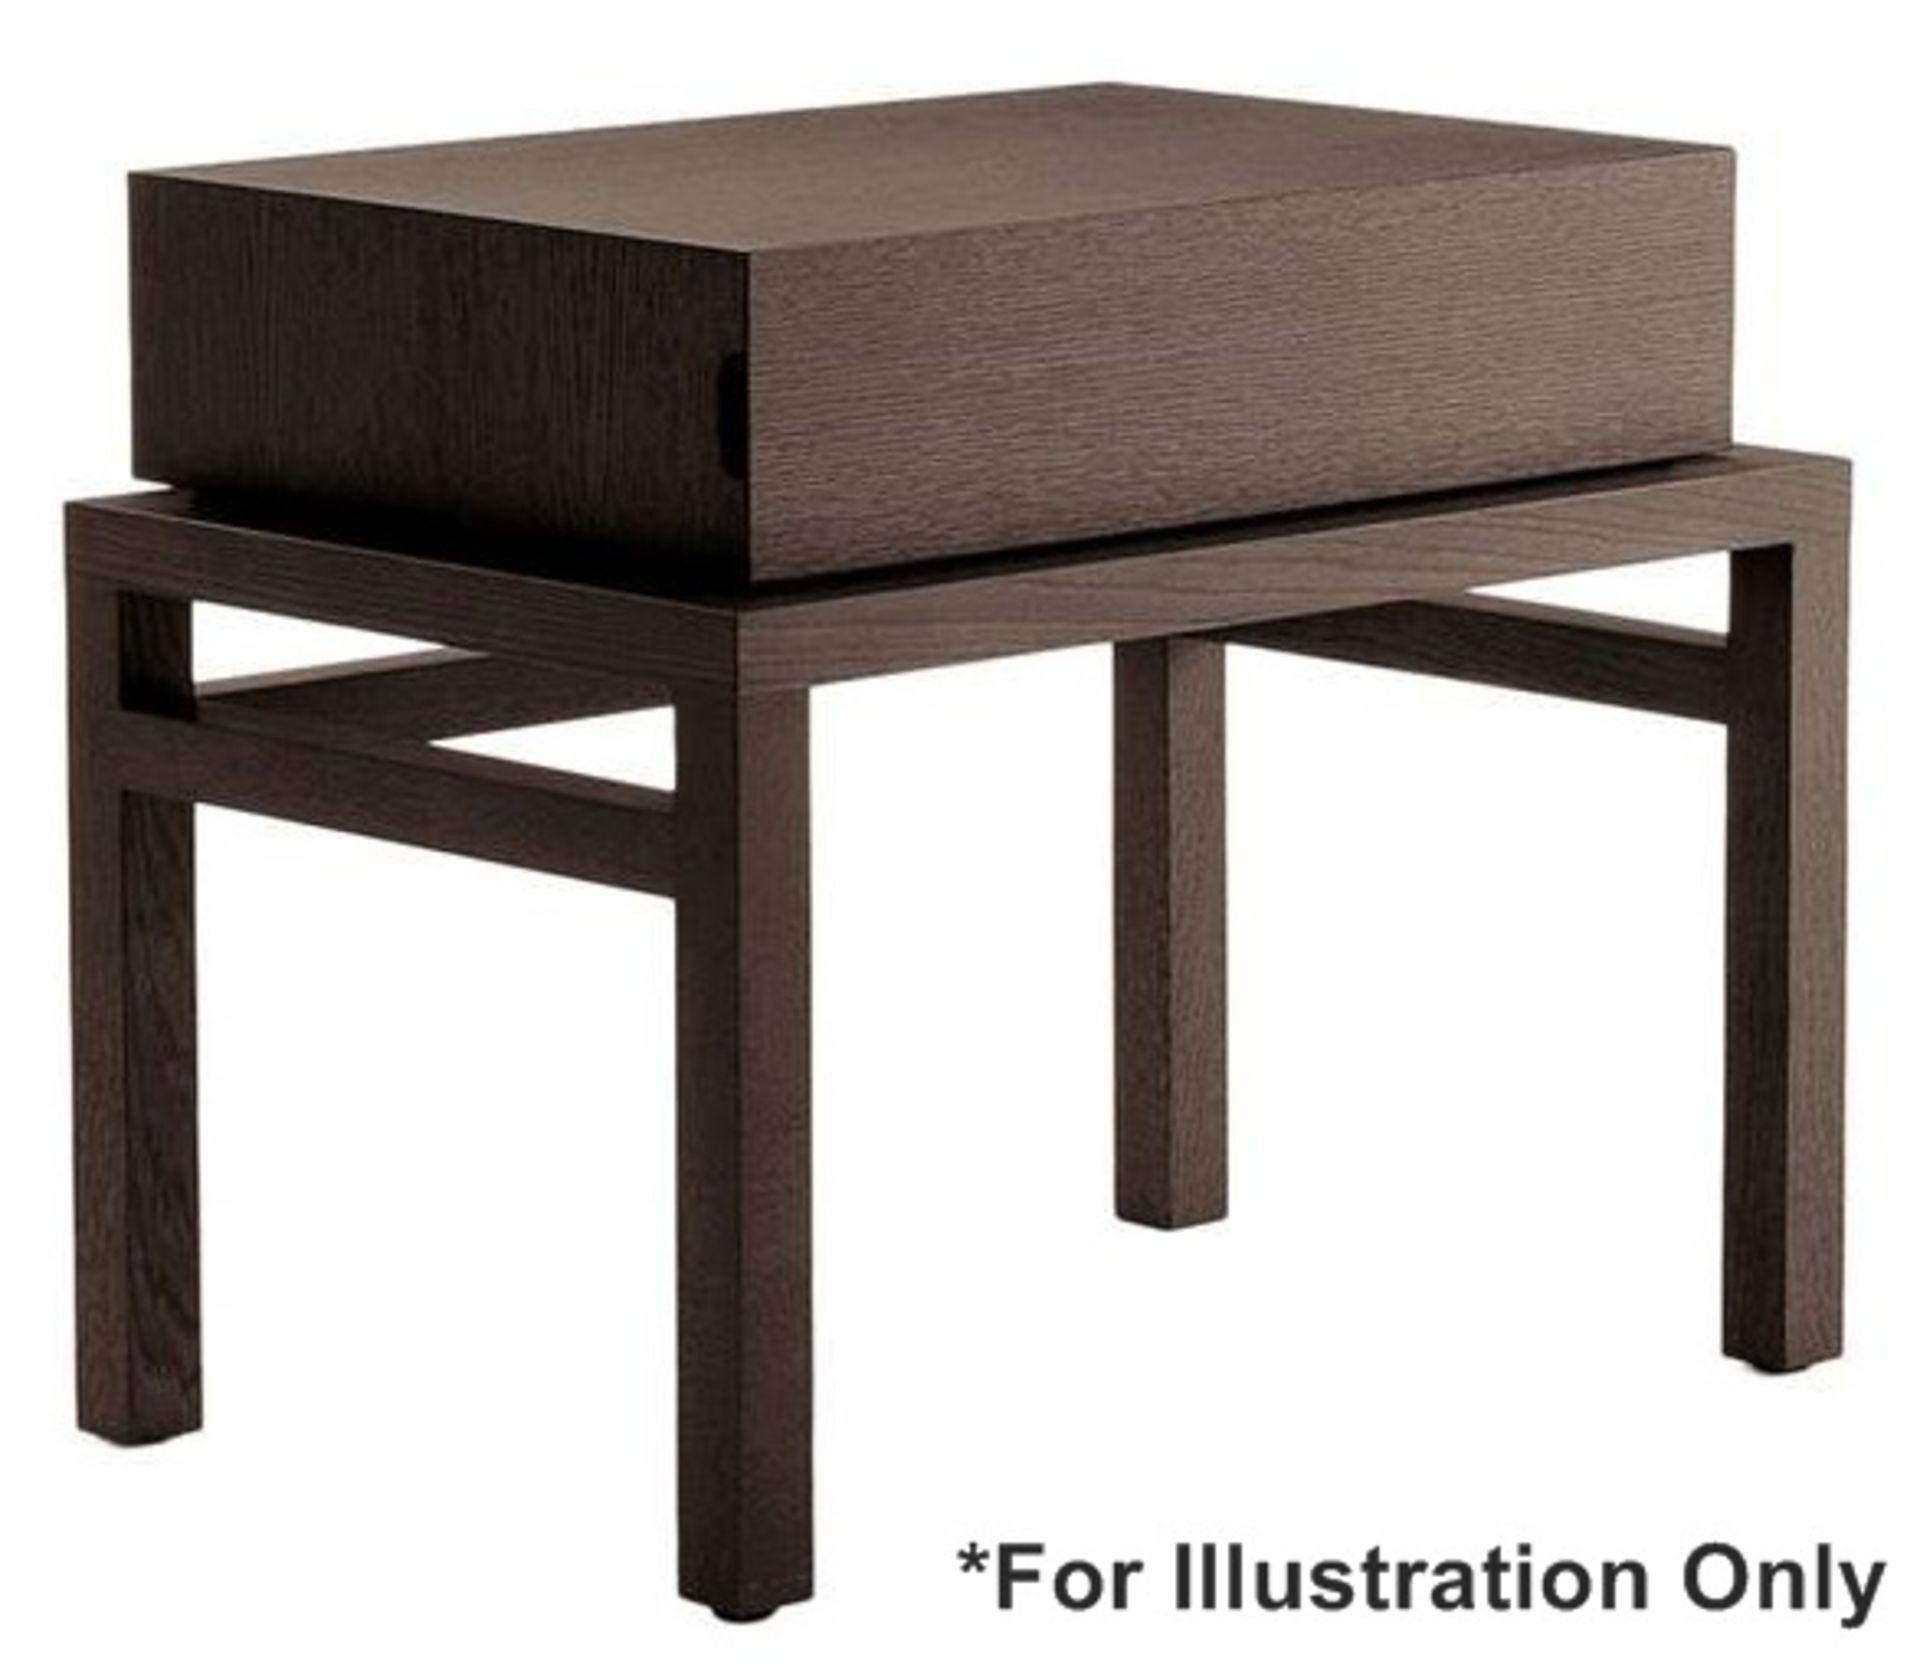 1 x B&B ITALIA / MAXALTO "Thronos" Small Table W/ Drawer - Oak Finish - Designer: Antonio Citterio -